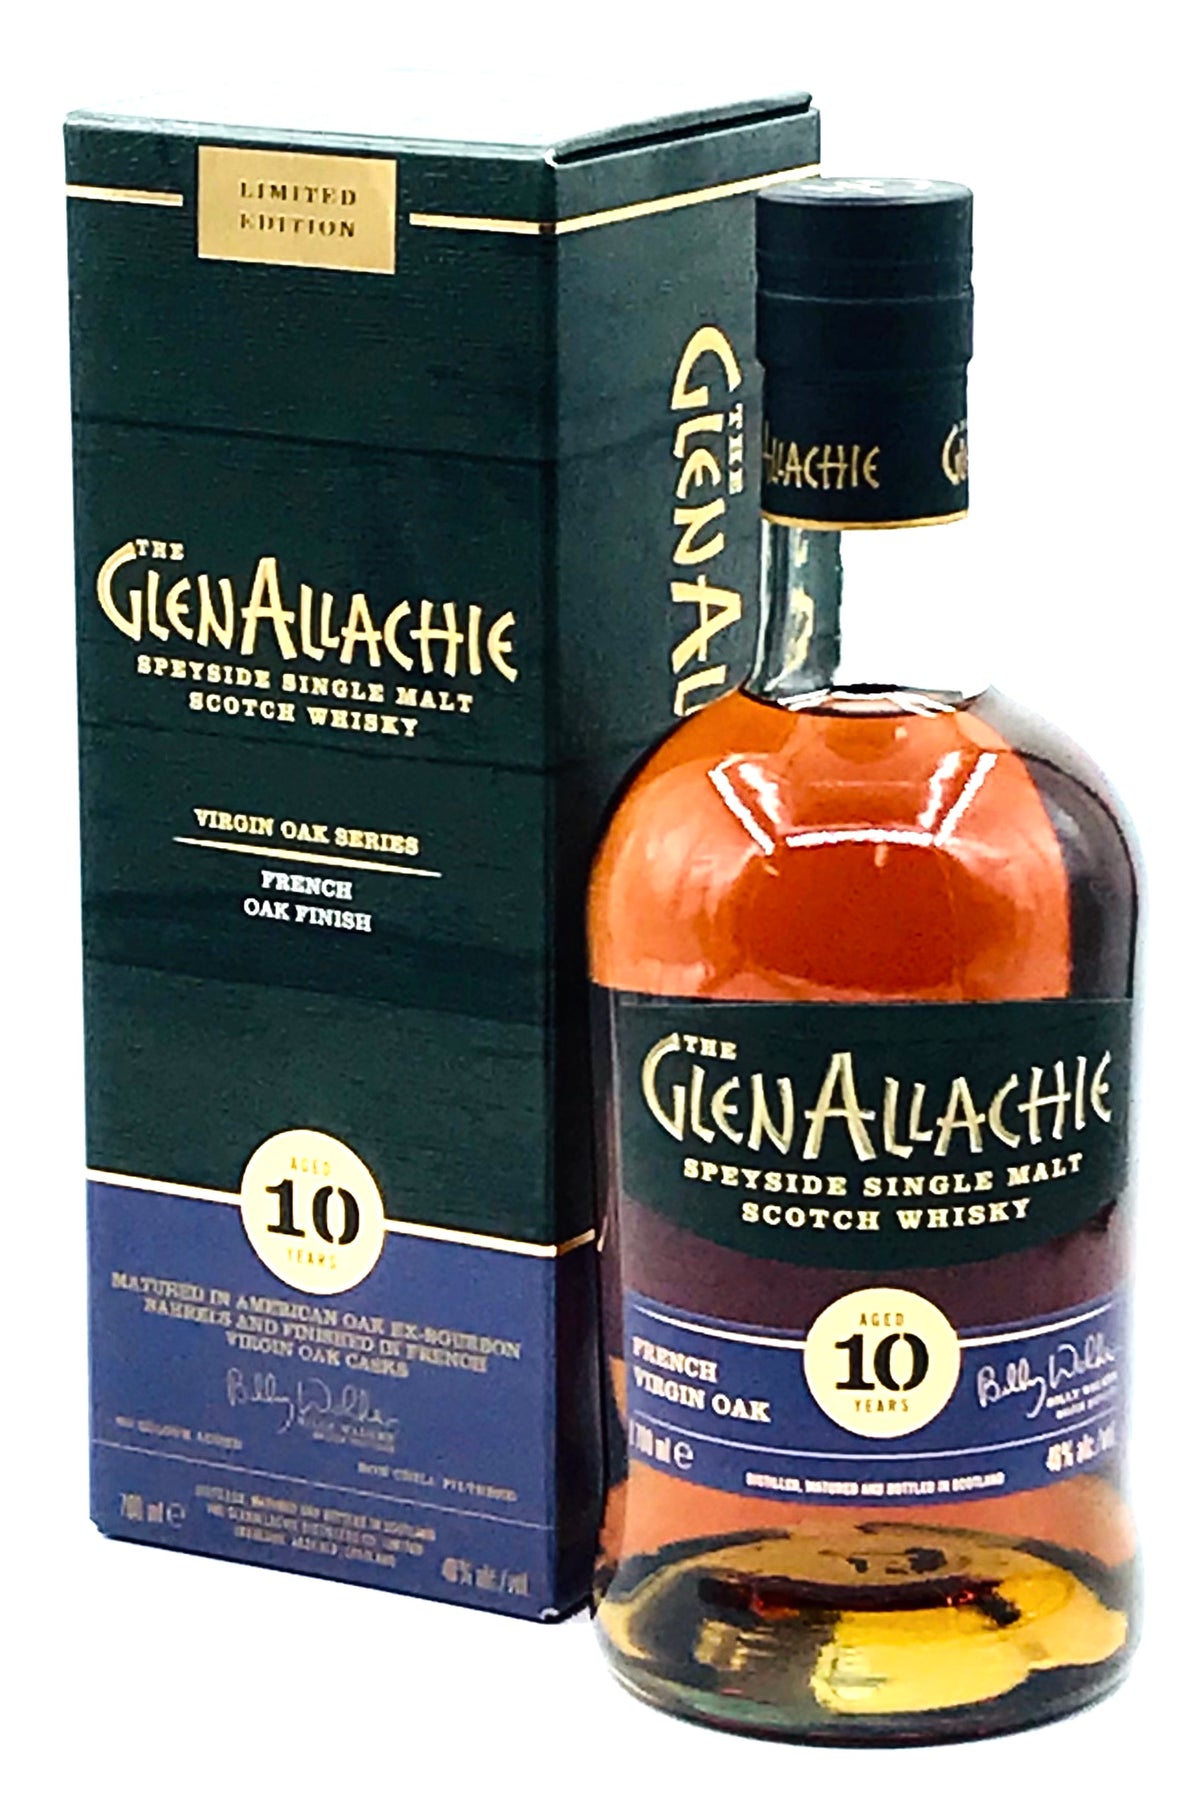 GlenAllachie 10 Year Old Virgin Oak French Single Malt Scotch Whisky